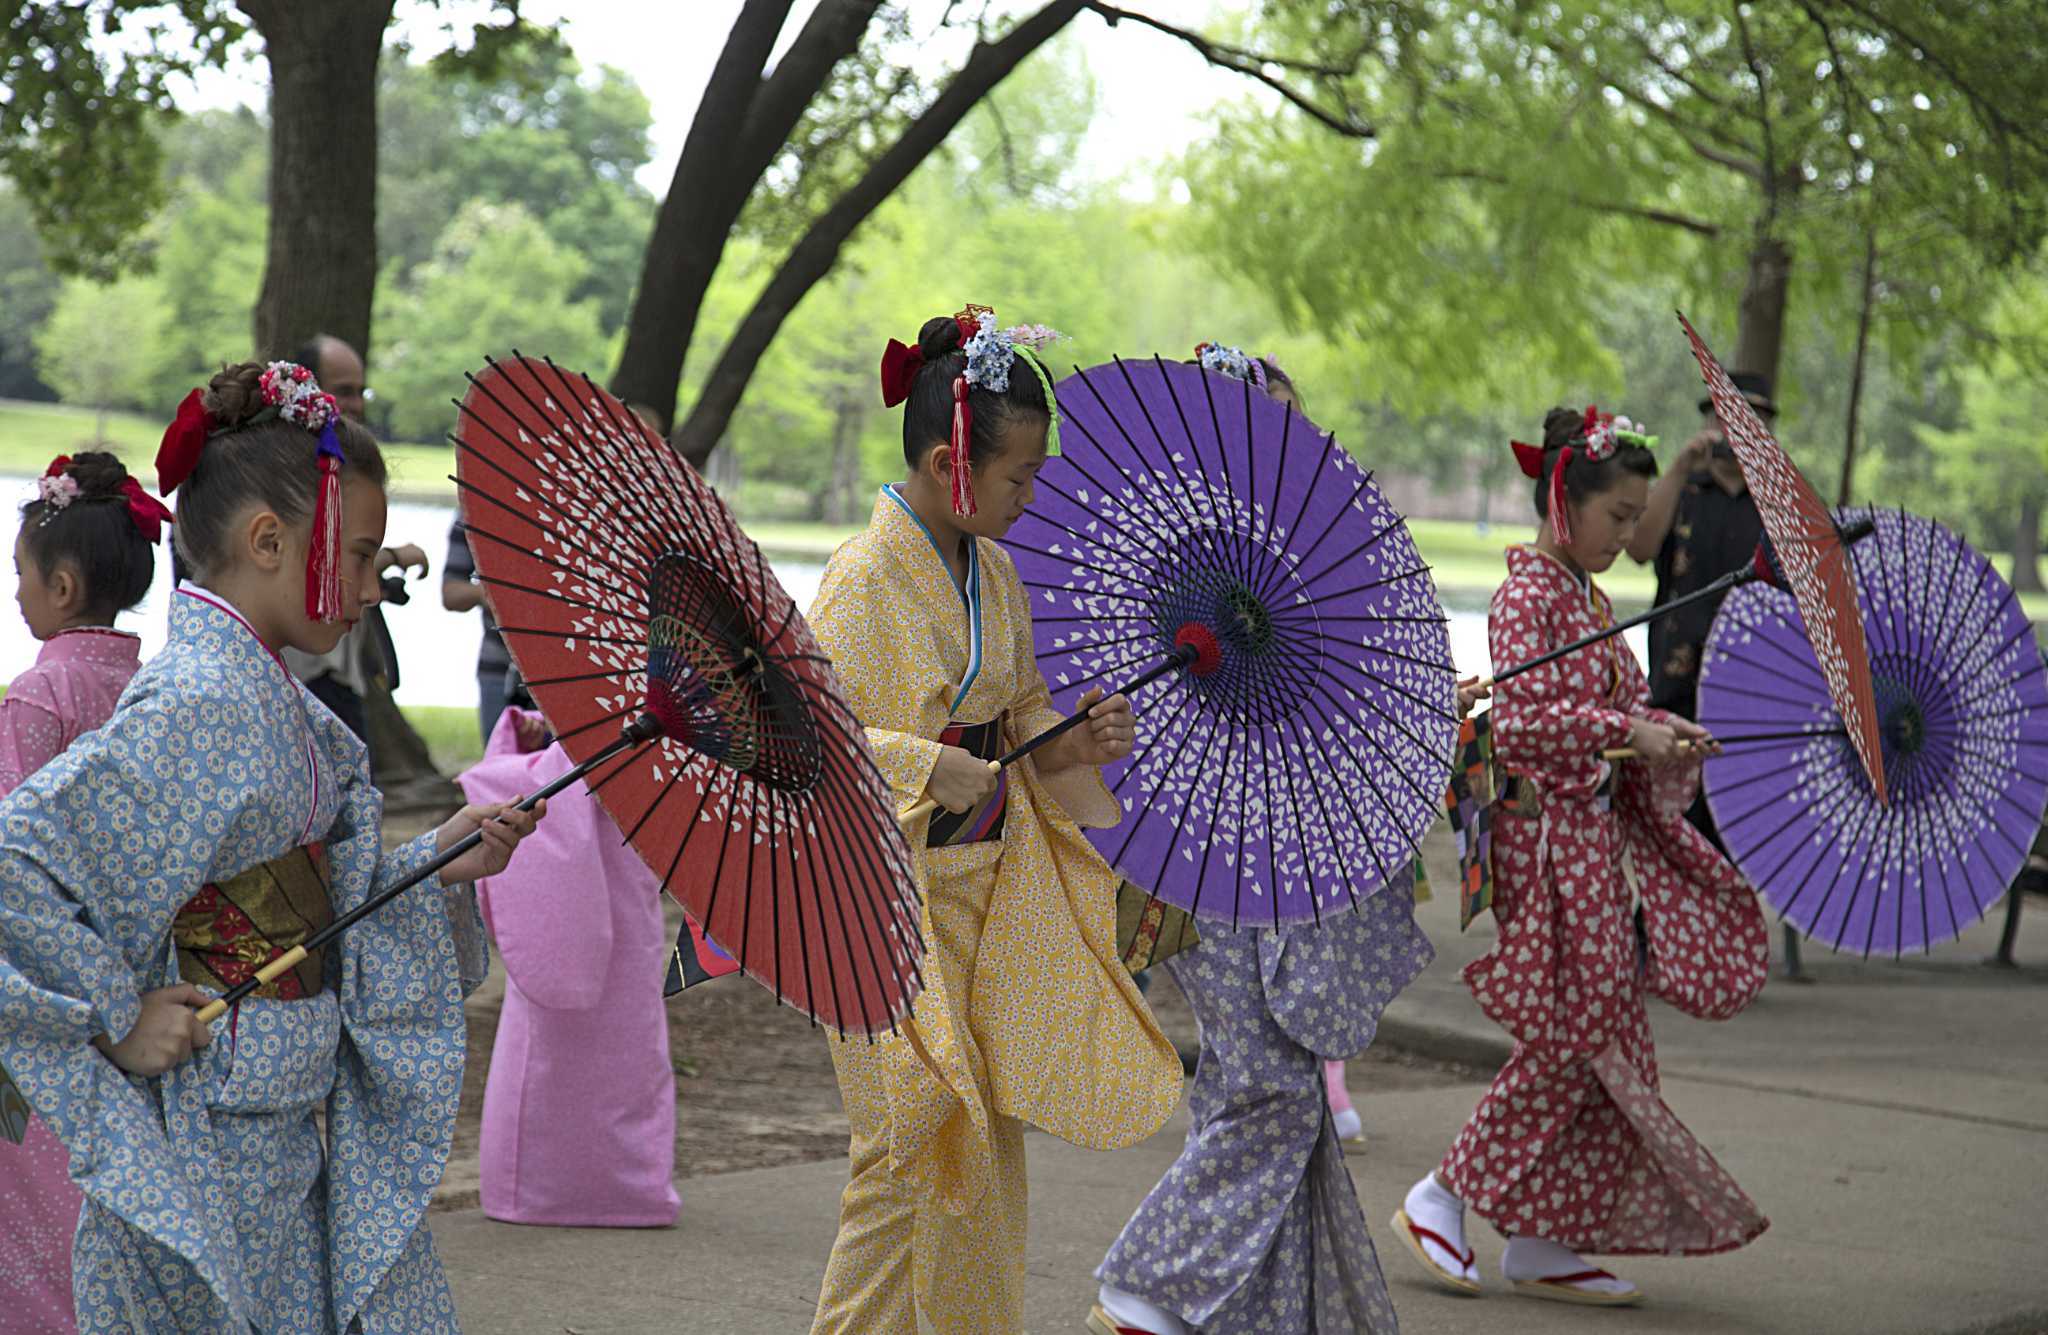 25th Annual Japan Festival slated for April 14-15 - Houston Chronicle2048 x 1335